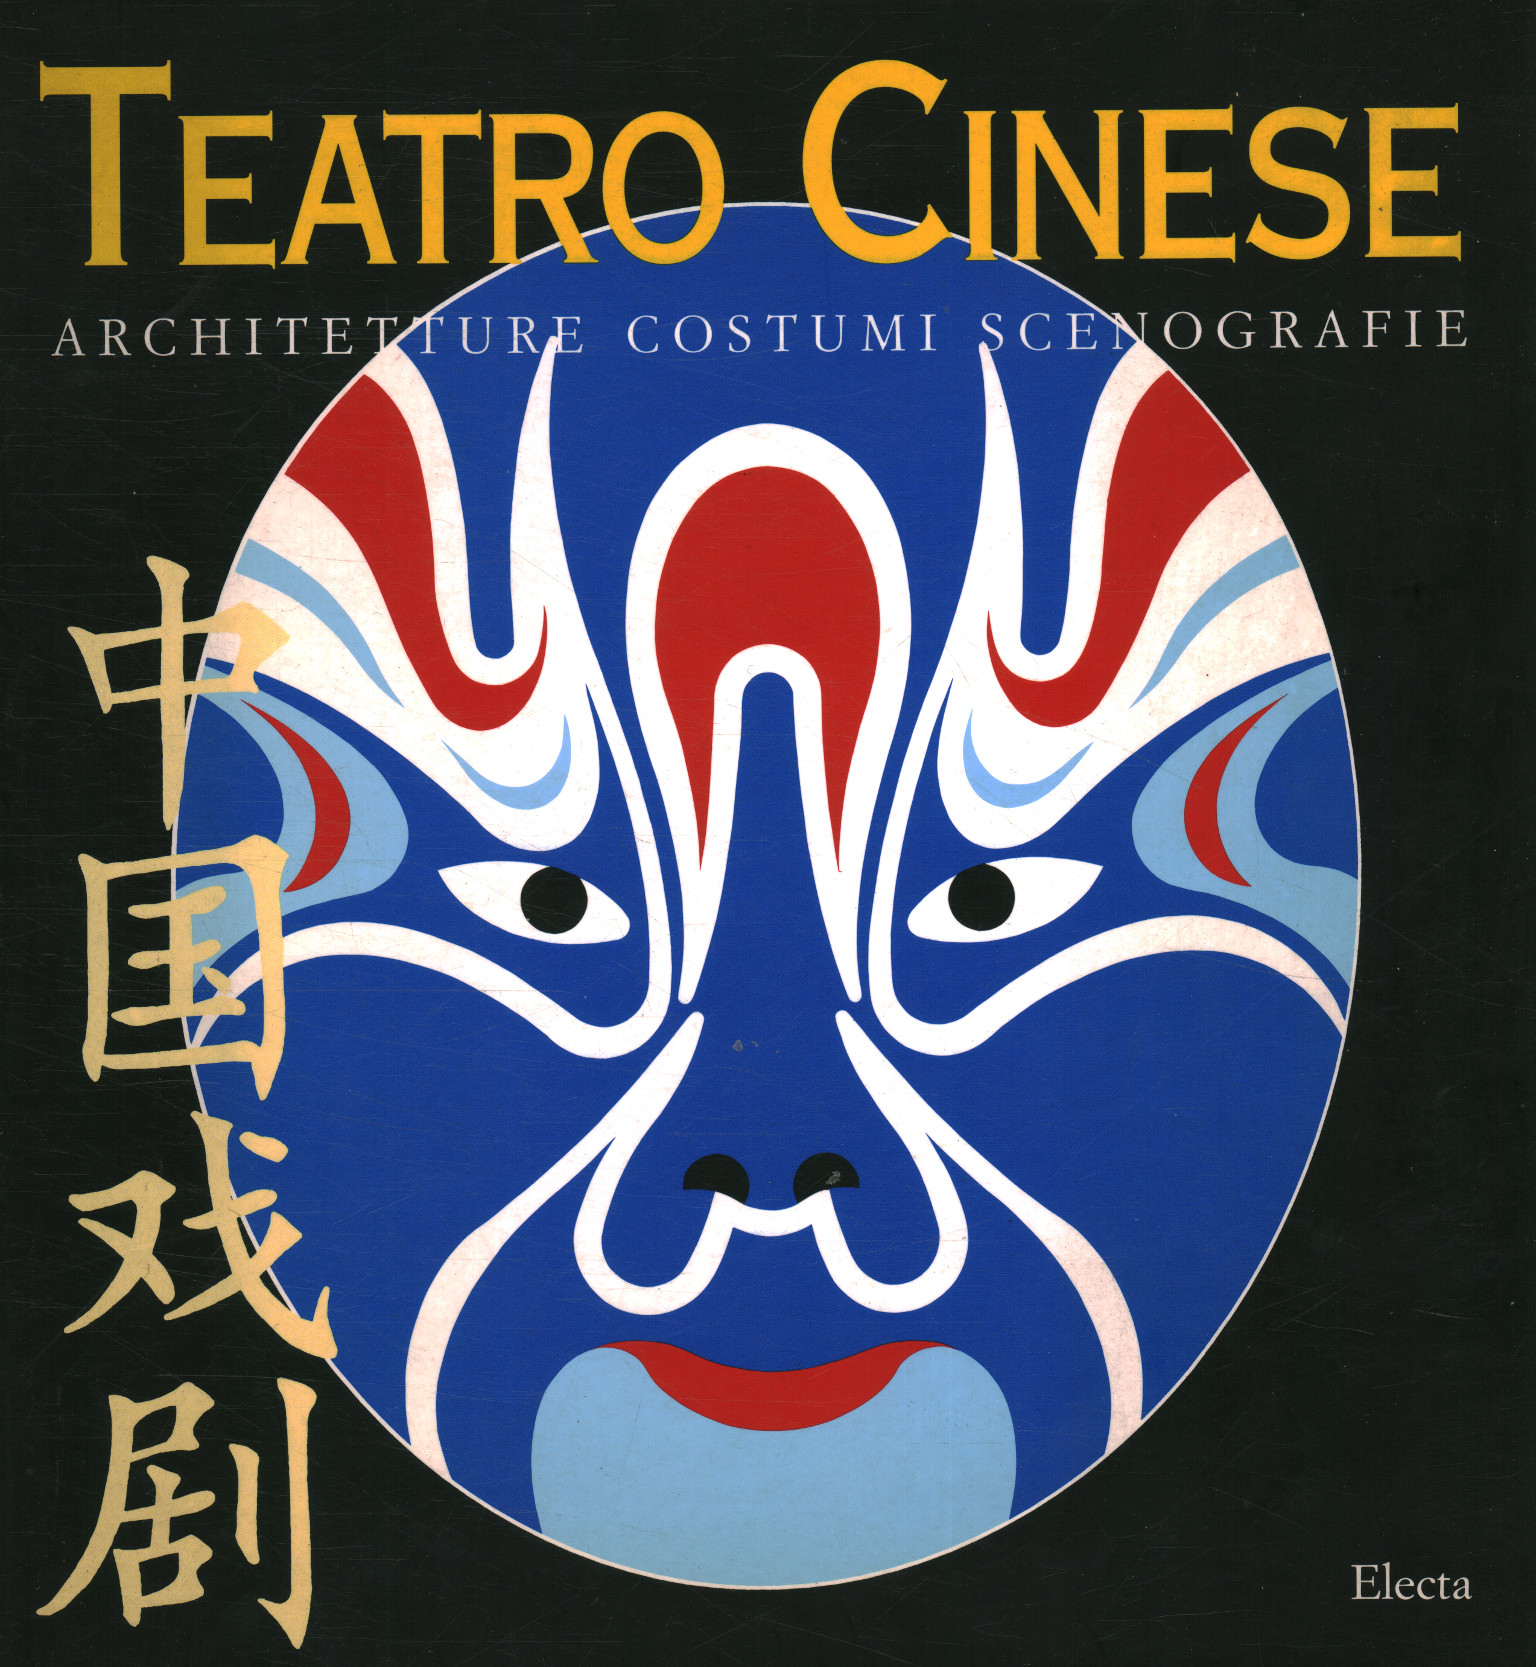 teatro chino